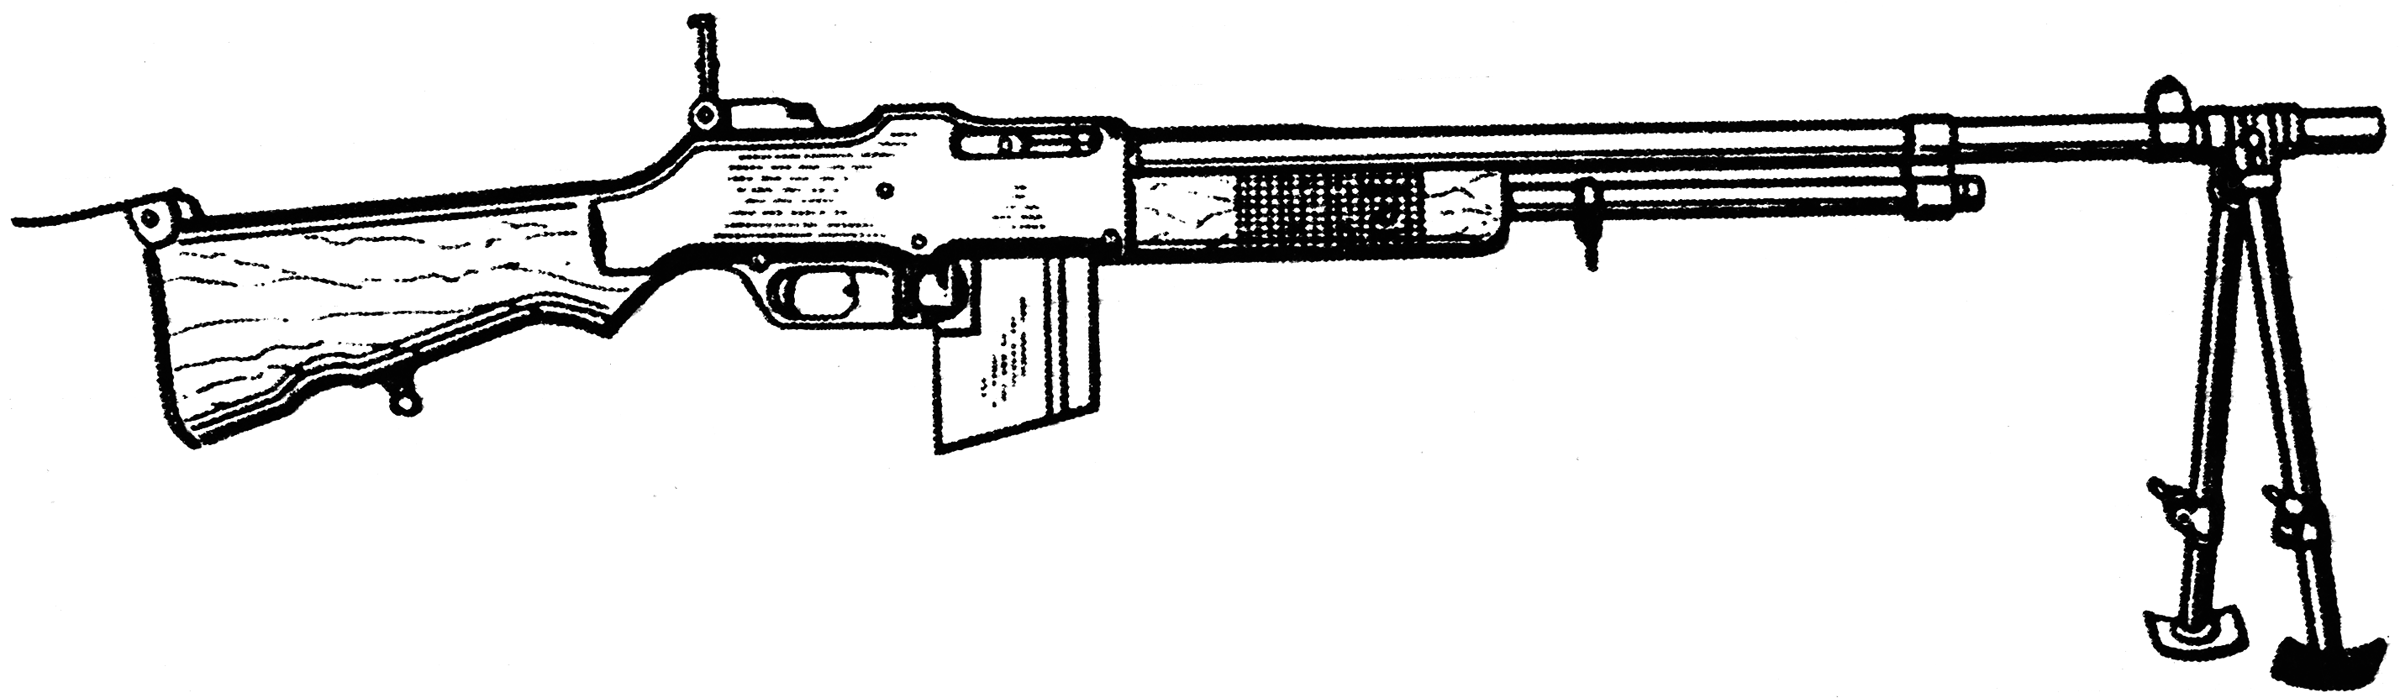 Автоматическая винтовка Браунинга м1918 чертеж